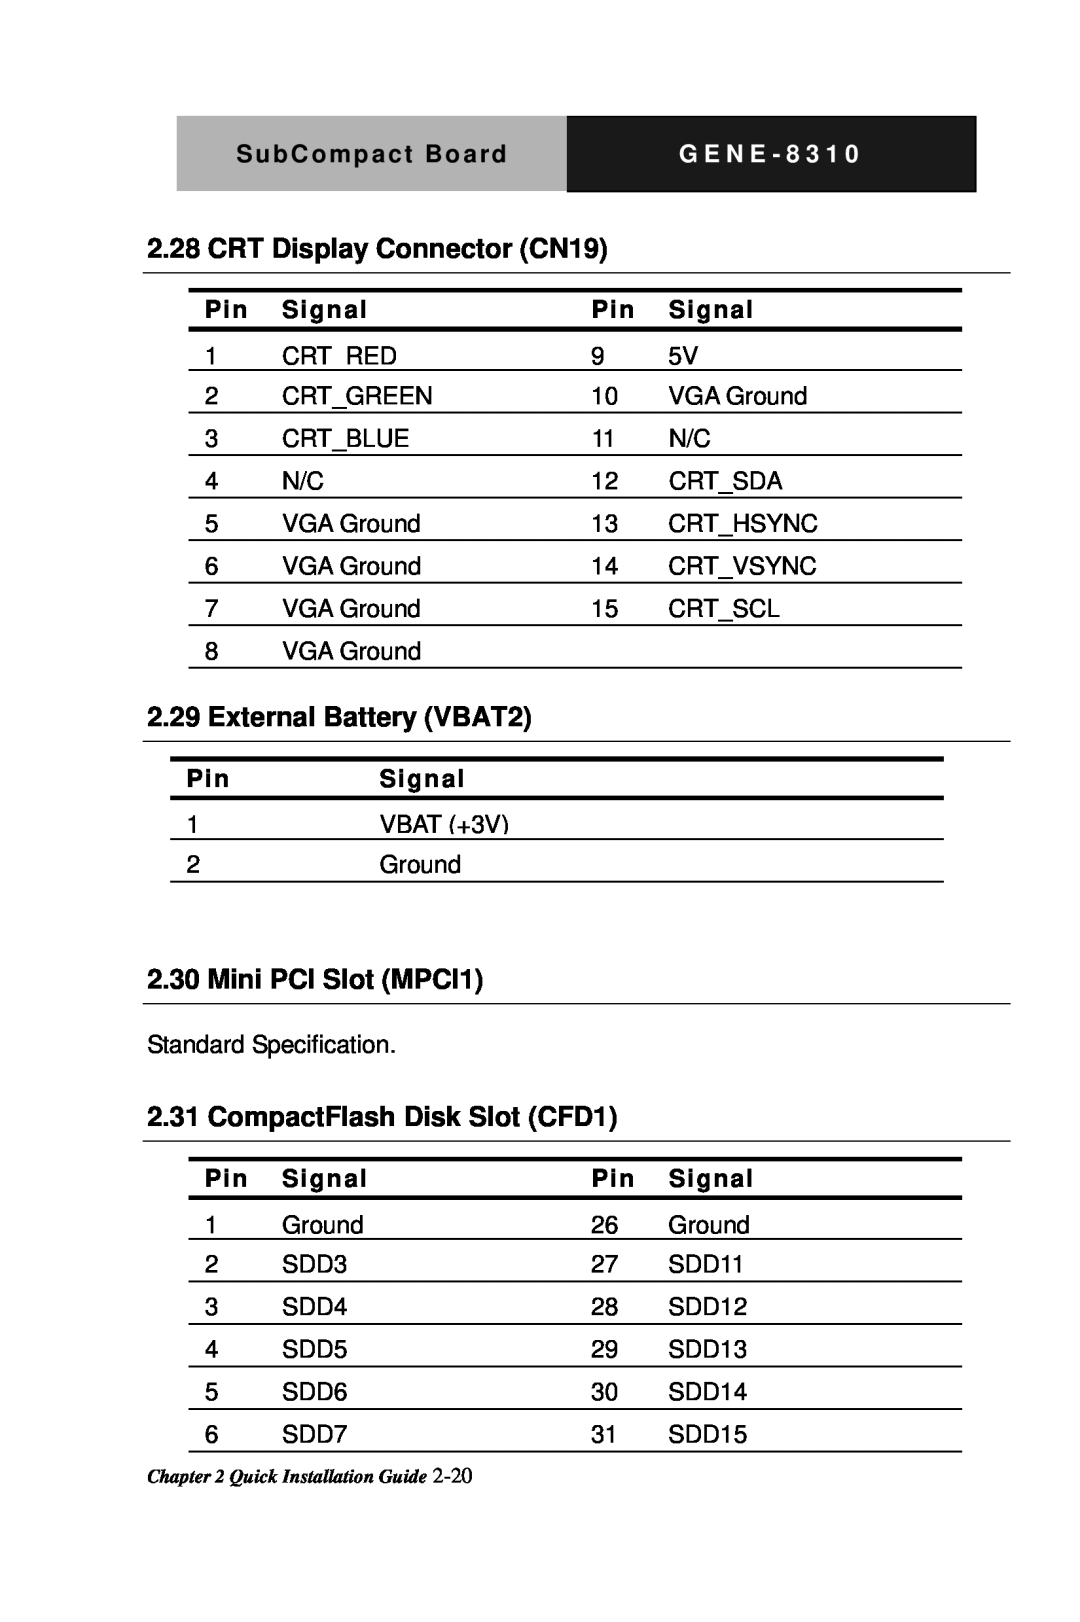 Intel GENE-8310 manual CRT Display Connector CN19, External Battery VBAT2, Mini PCI Slot MPCI1, CompactFlash Disk Slot CFD1 